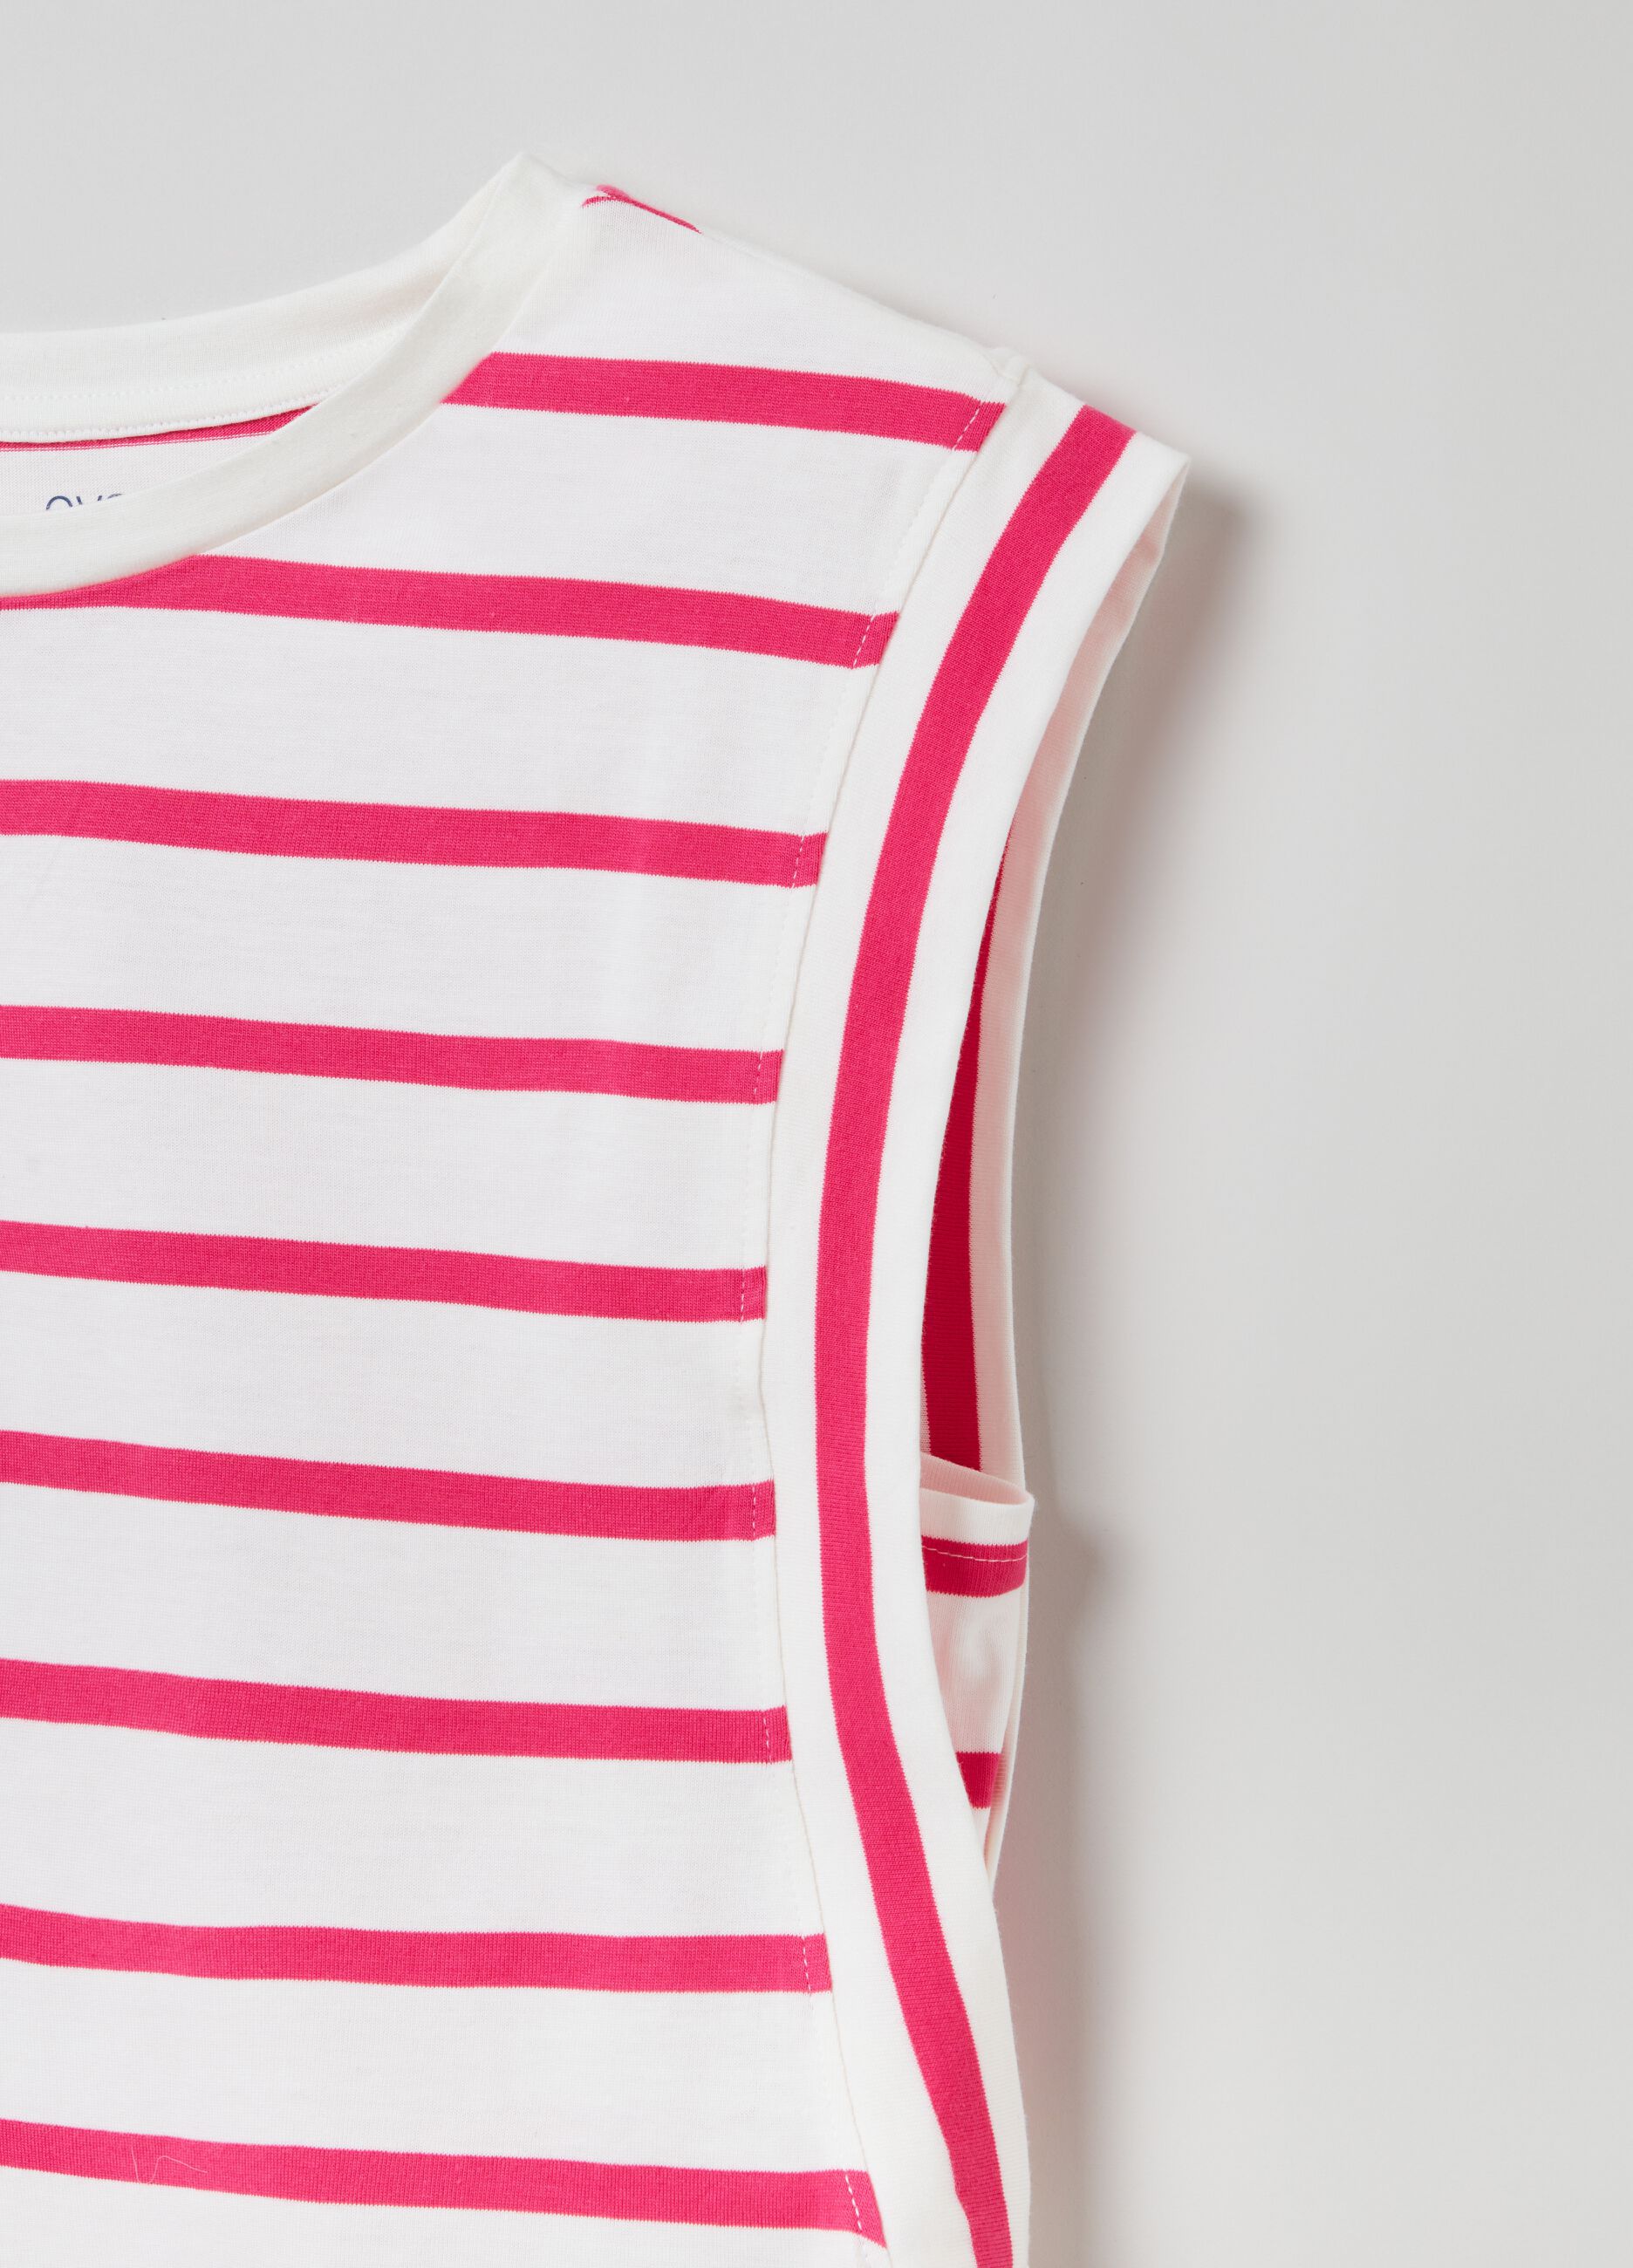 Sleeveless striped T-shirt